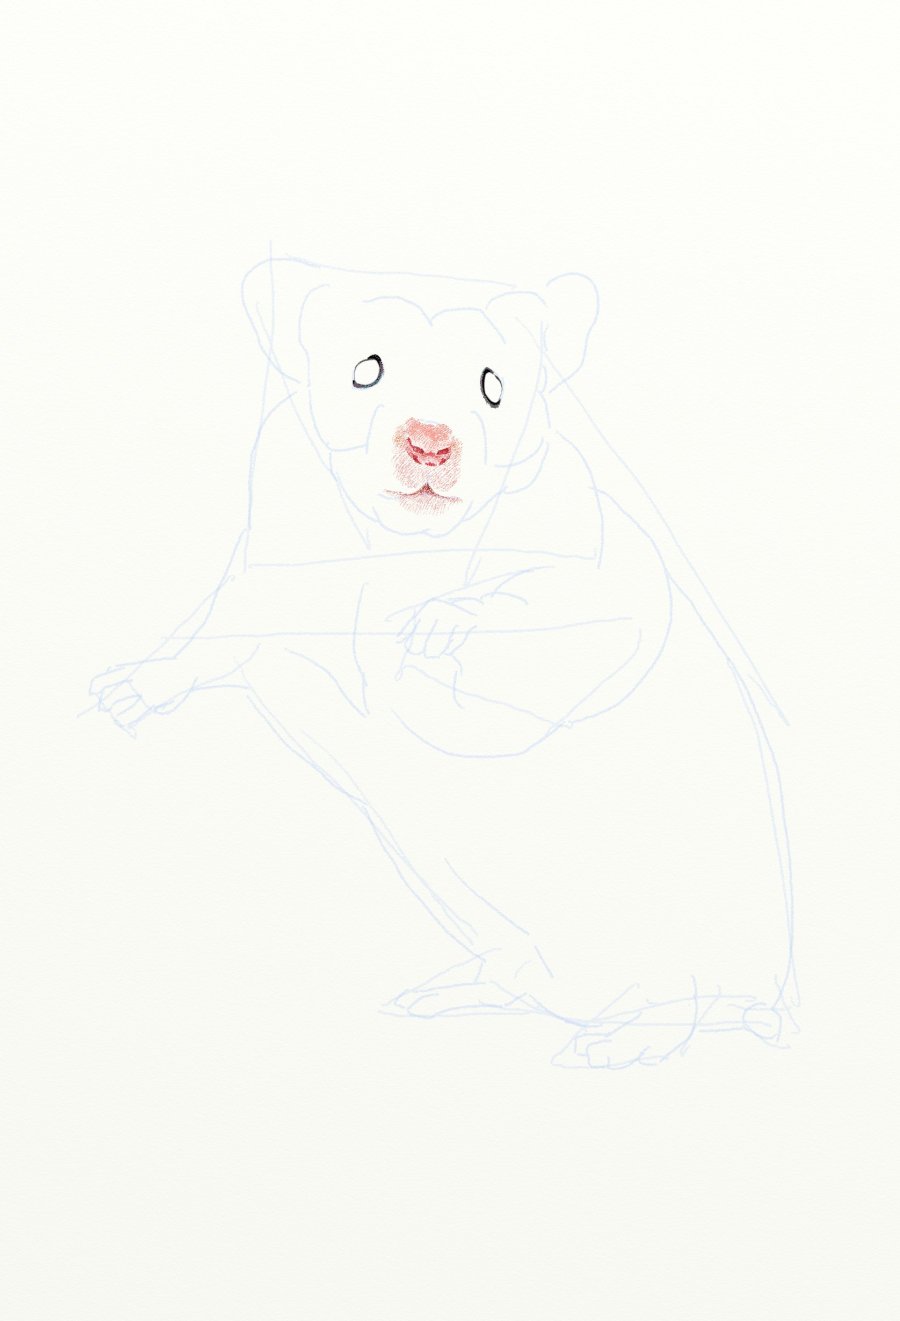 painter绘制一只可爱的小老鼠插画4